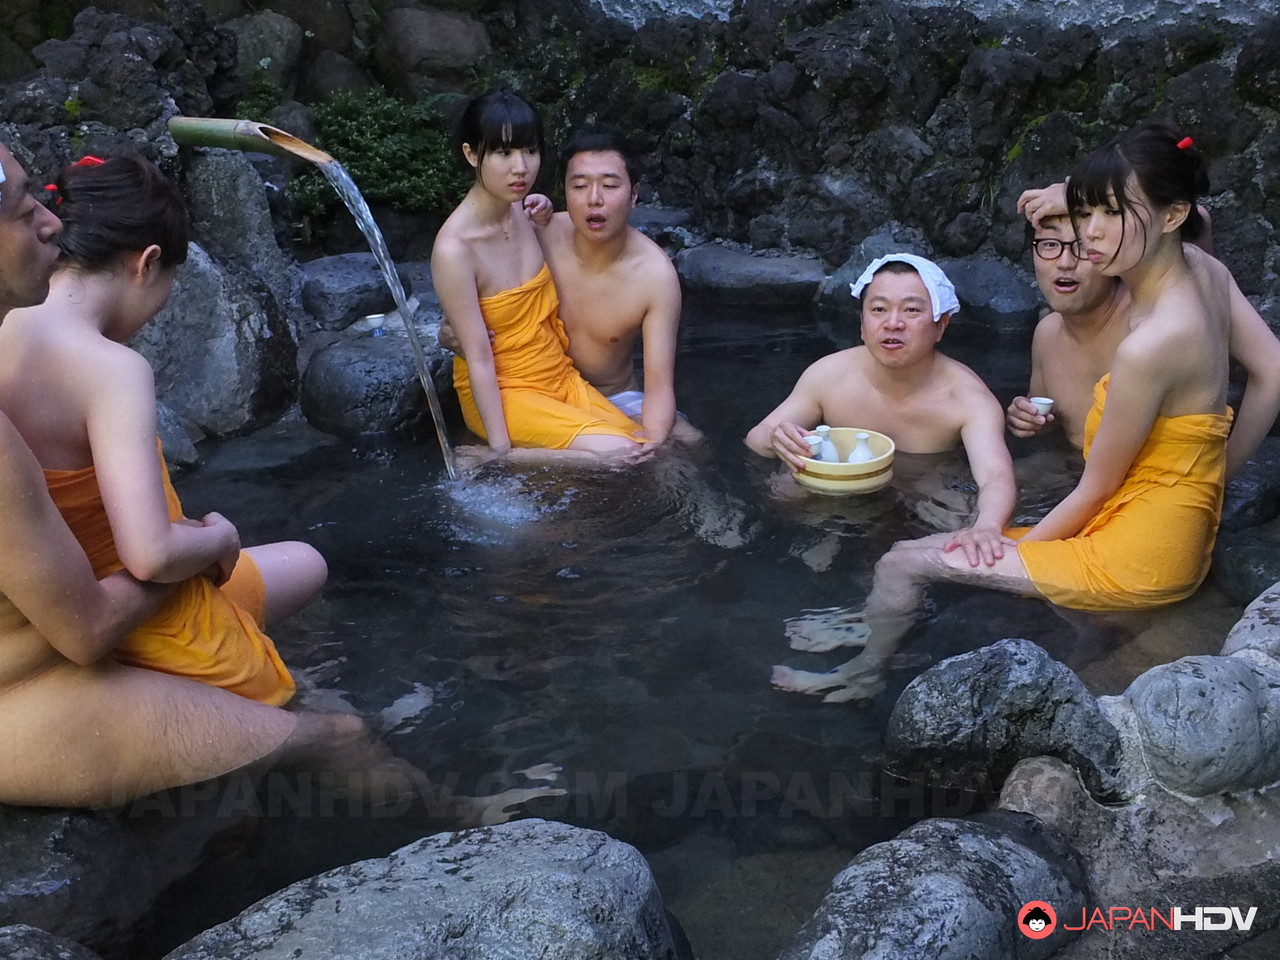 Three Japanese virgins get involved in an Asian orgy at the spa porno fotoğrafı #428331197 | Japan HDV Pics, Jyuri Ayase, Nozomi Koizumi, Yuuko Kohinata, Japanese, mobil porno